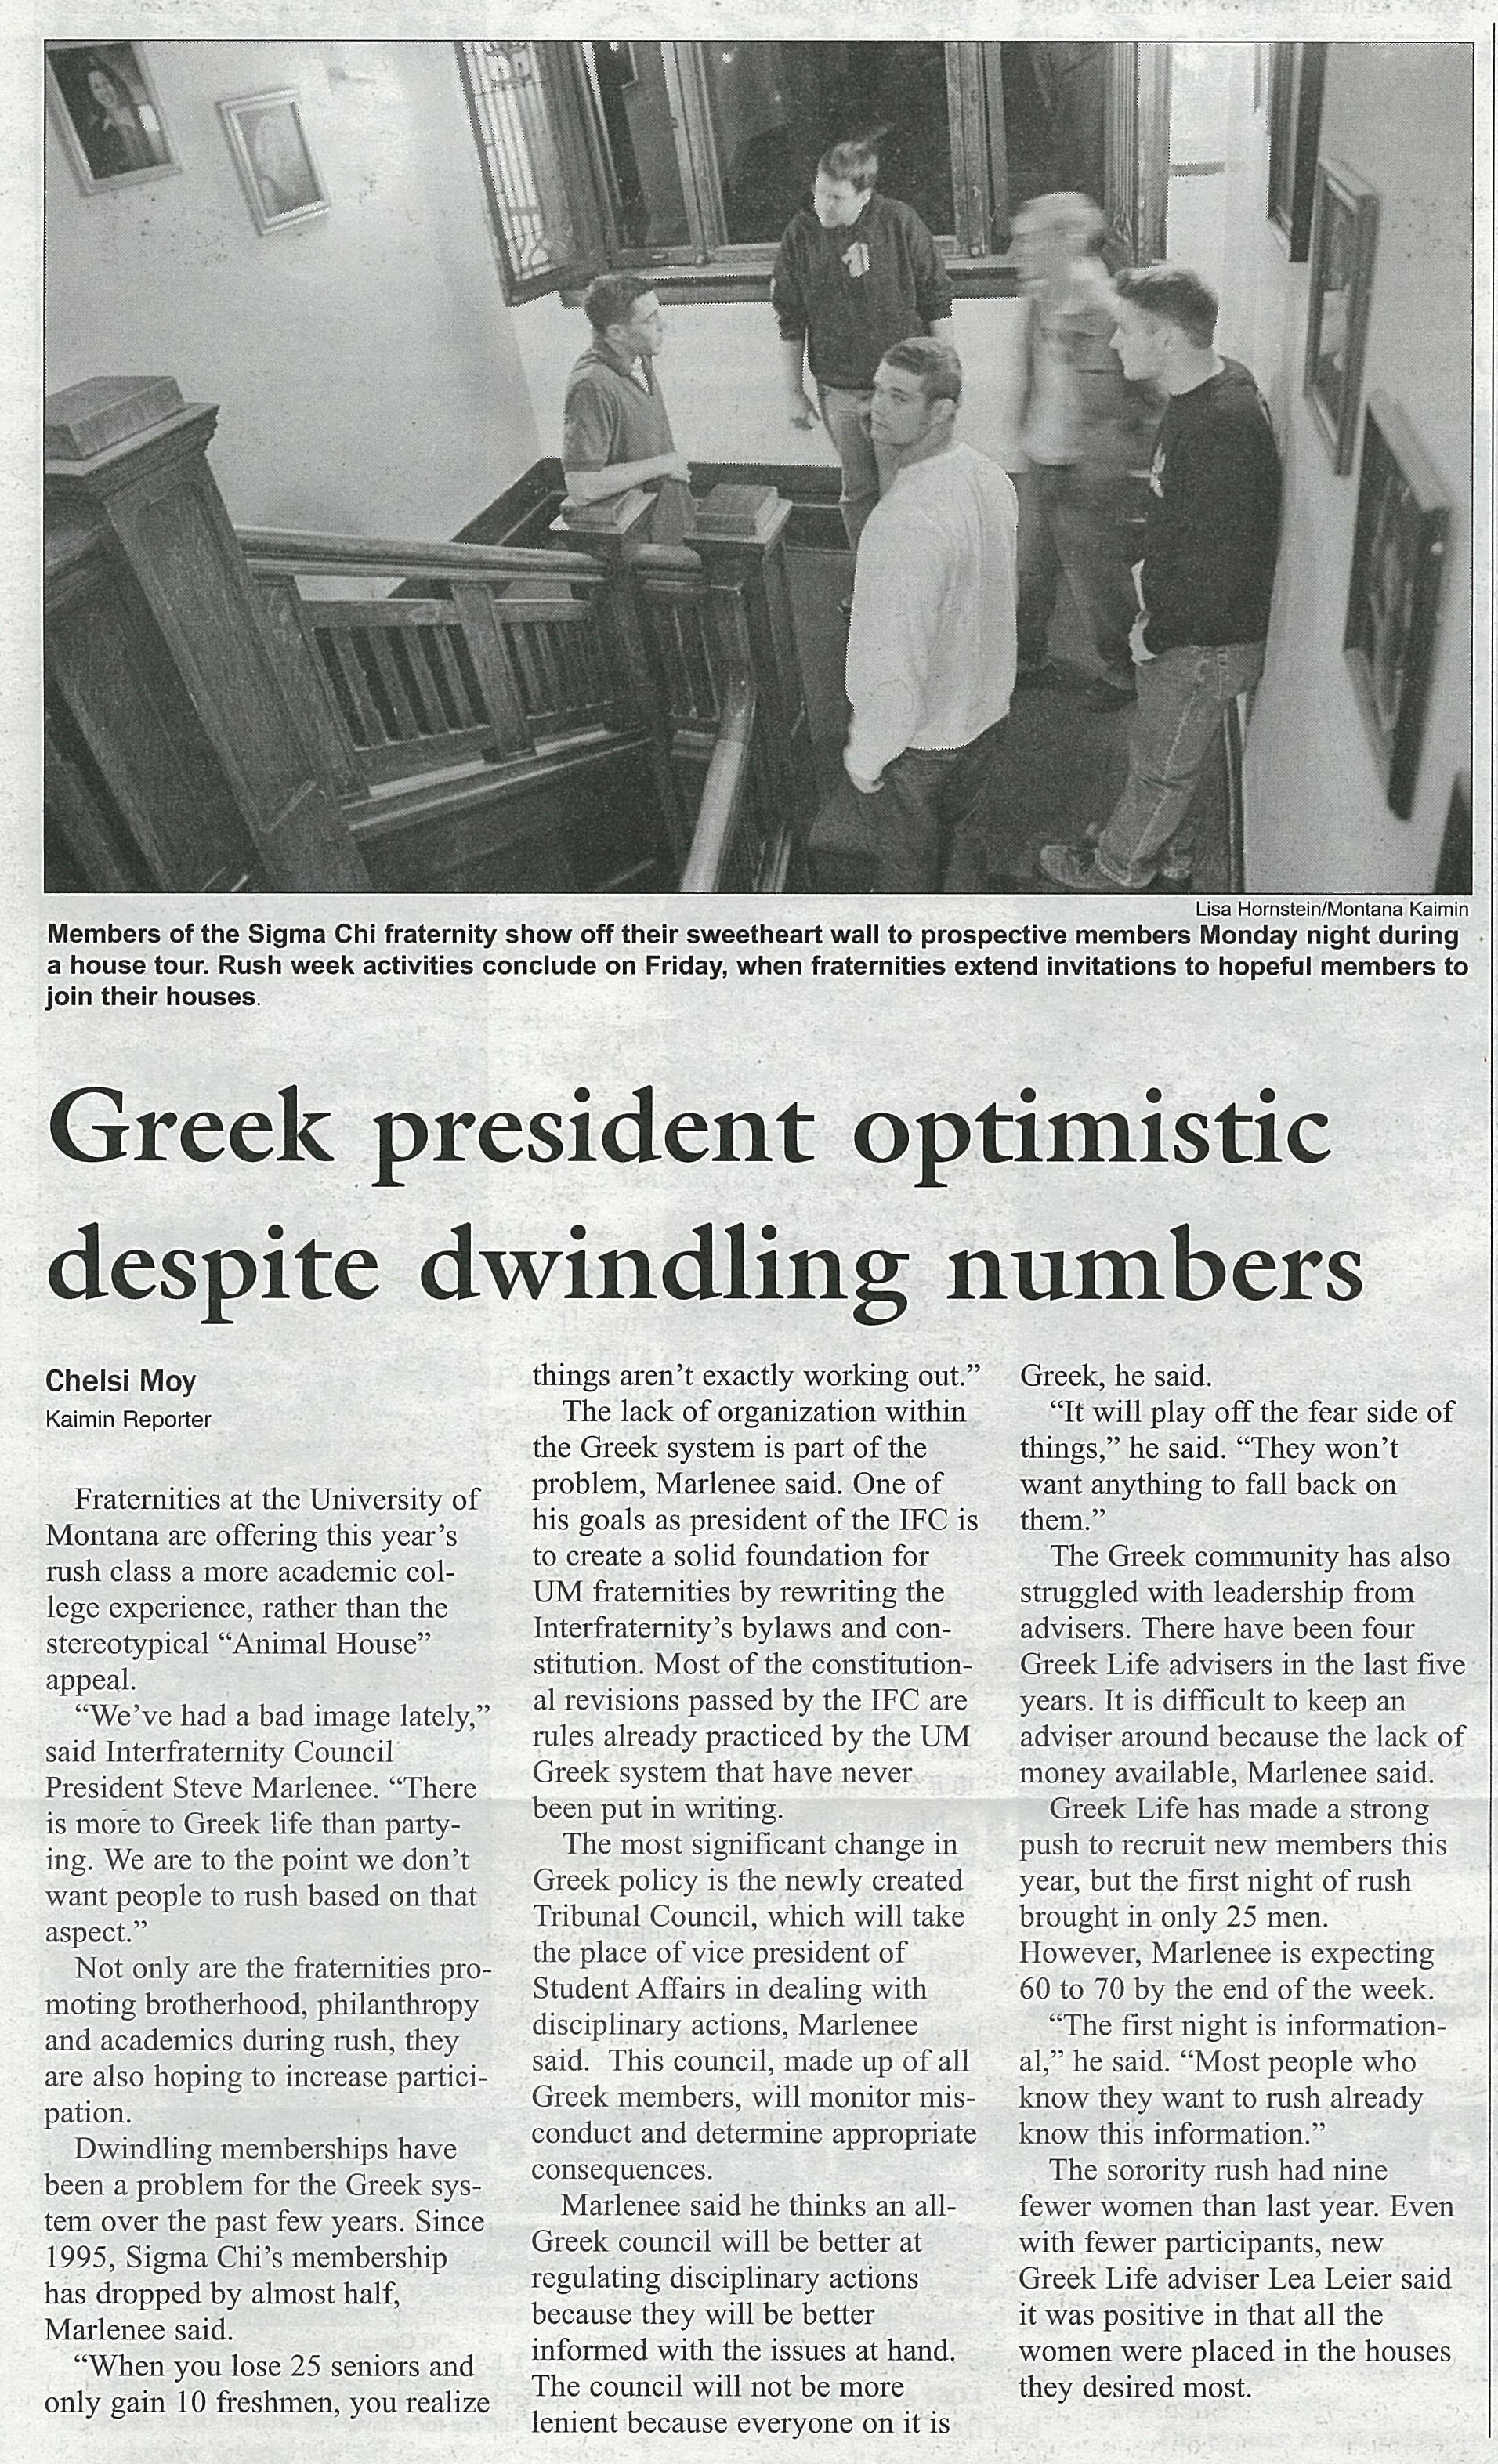 Greek President Optimistic Despite Dwindling Numbers, page 7